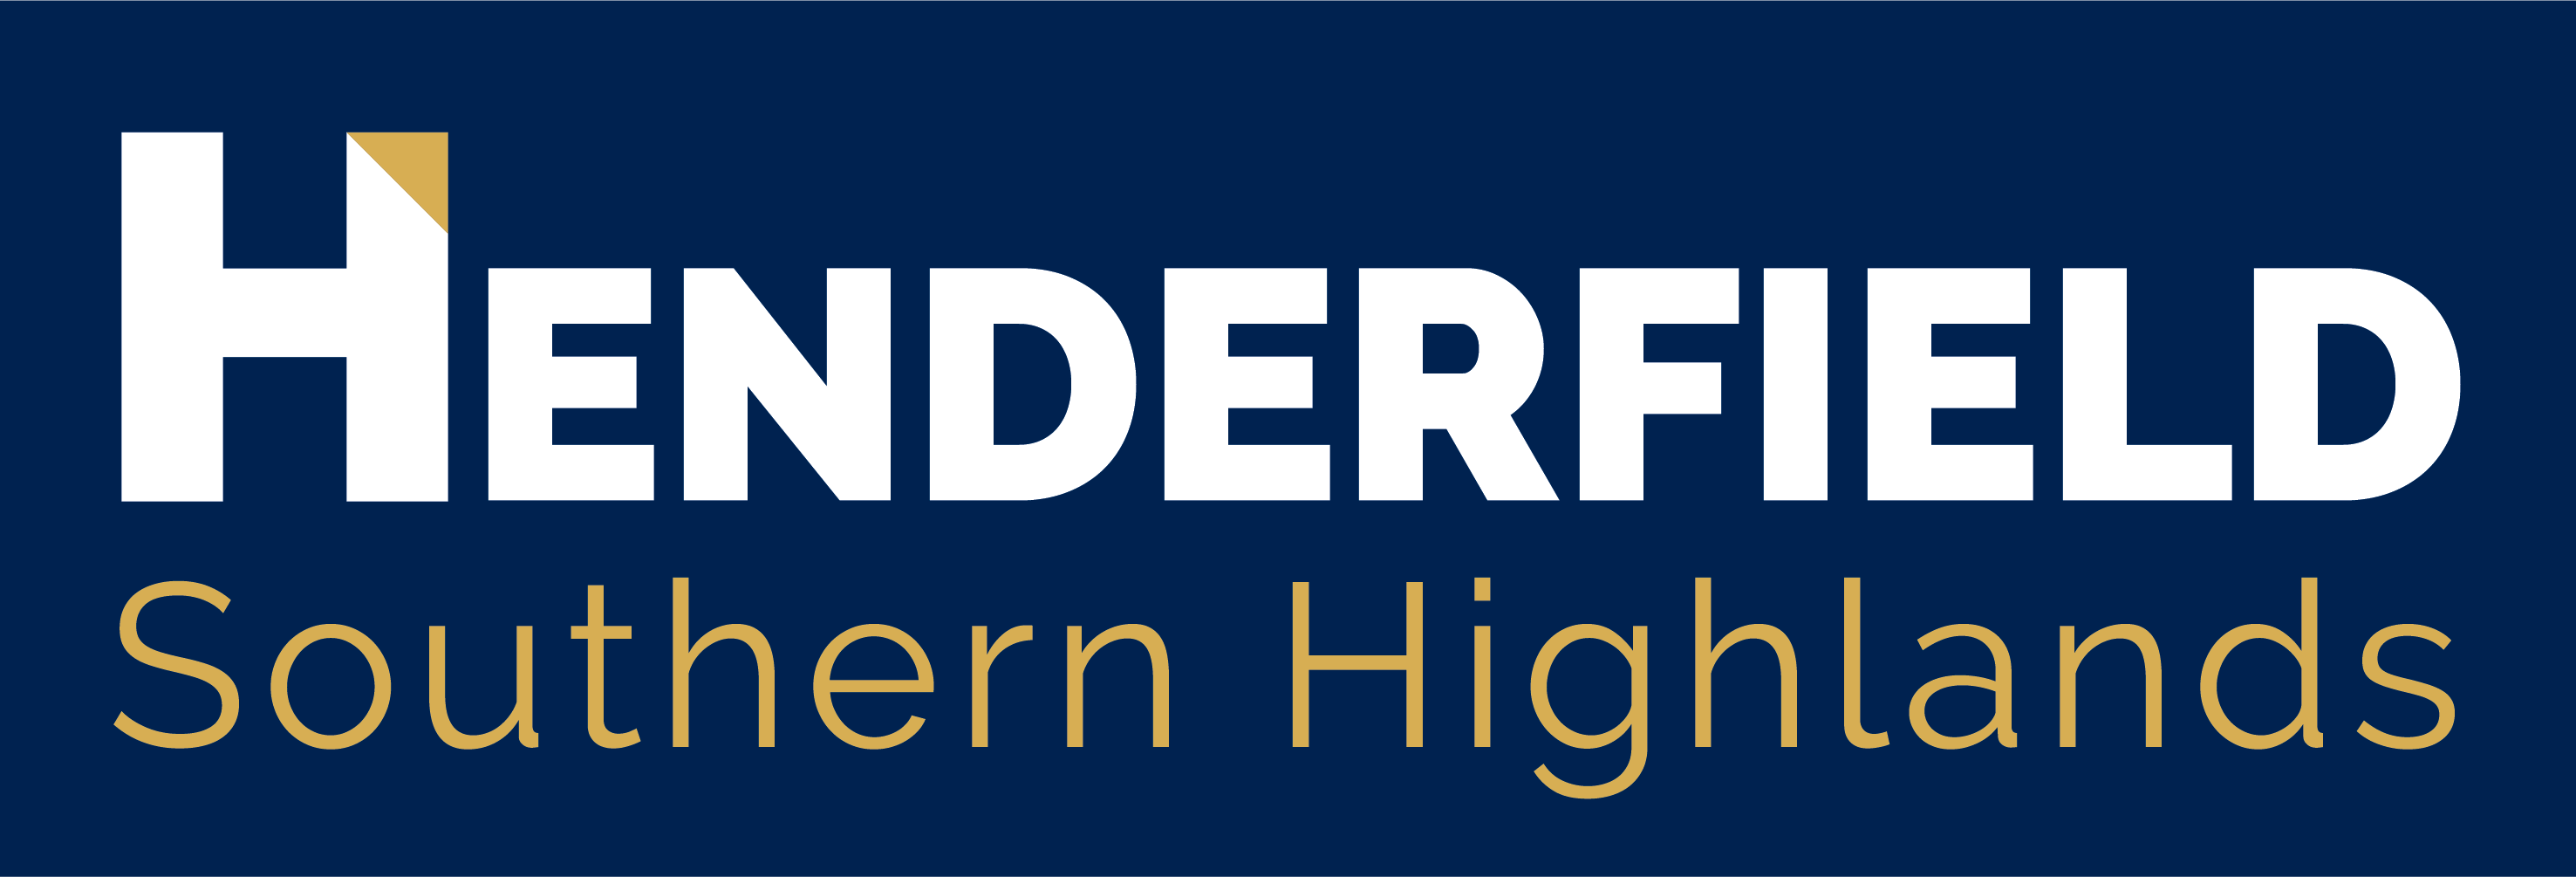 Henderfield Southern Highlands 